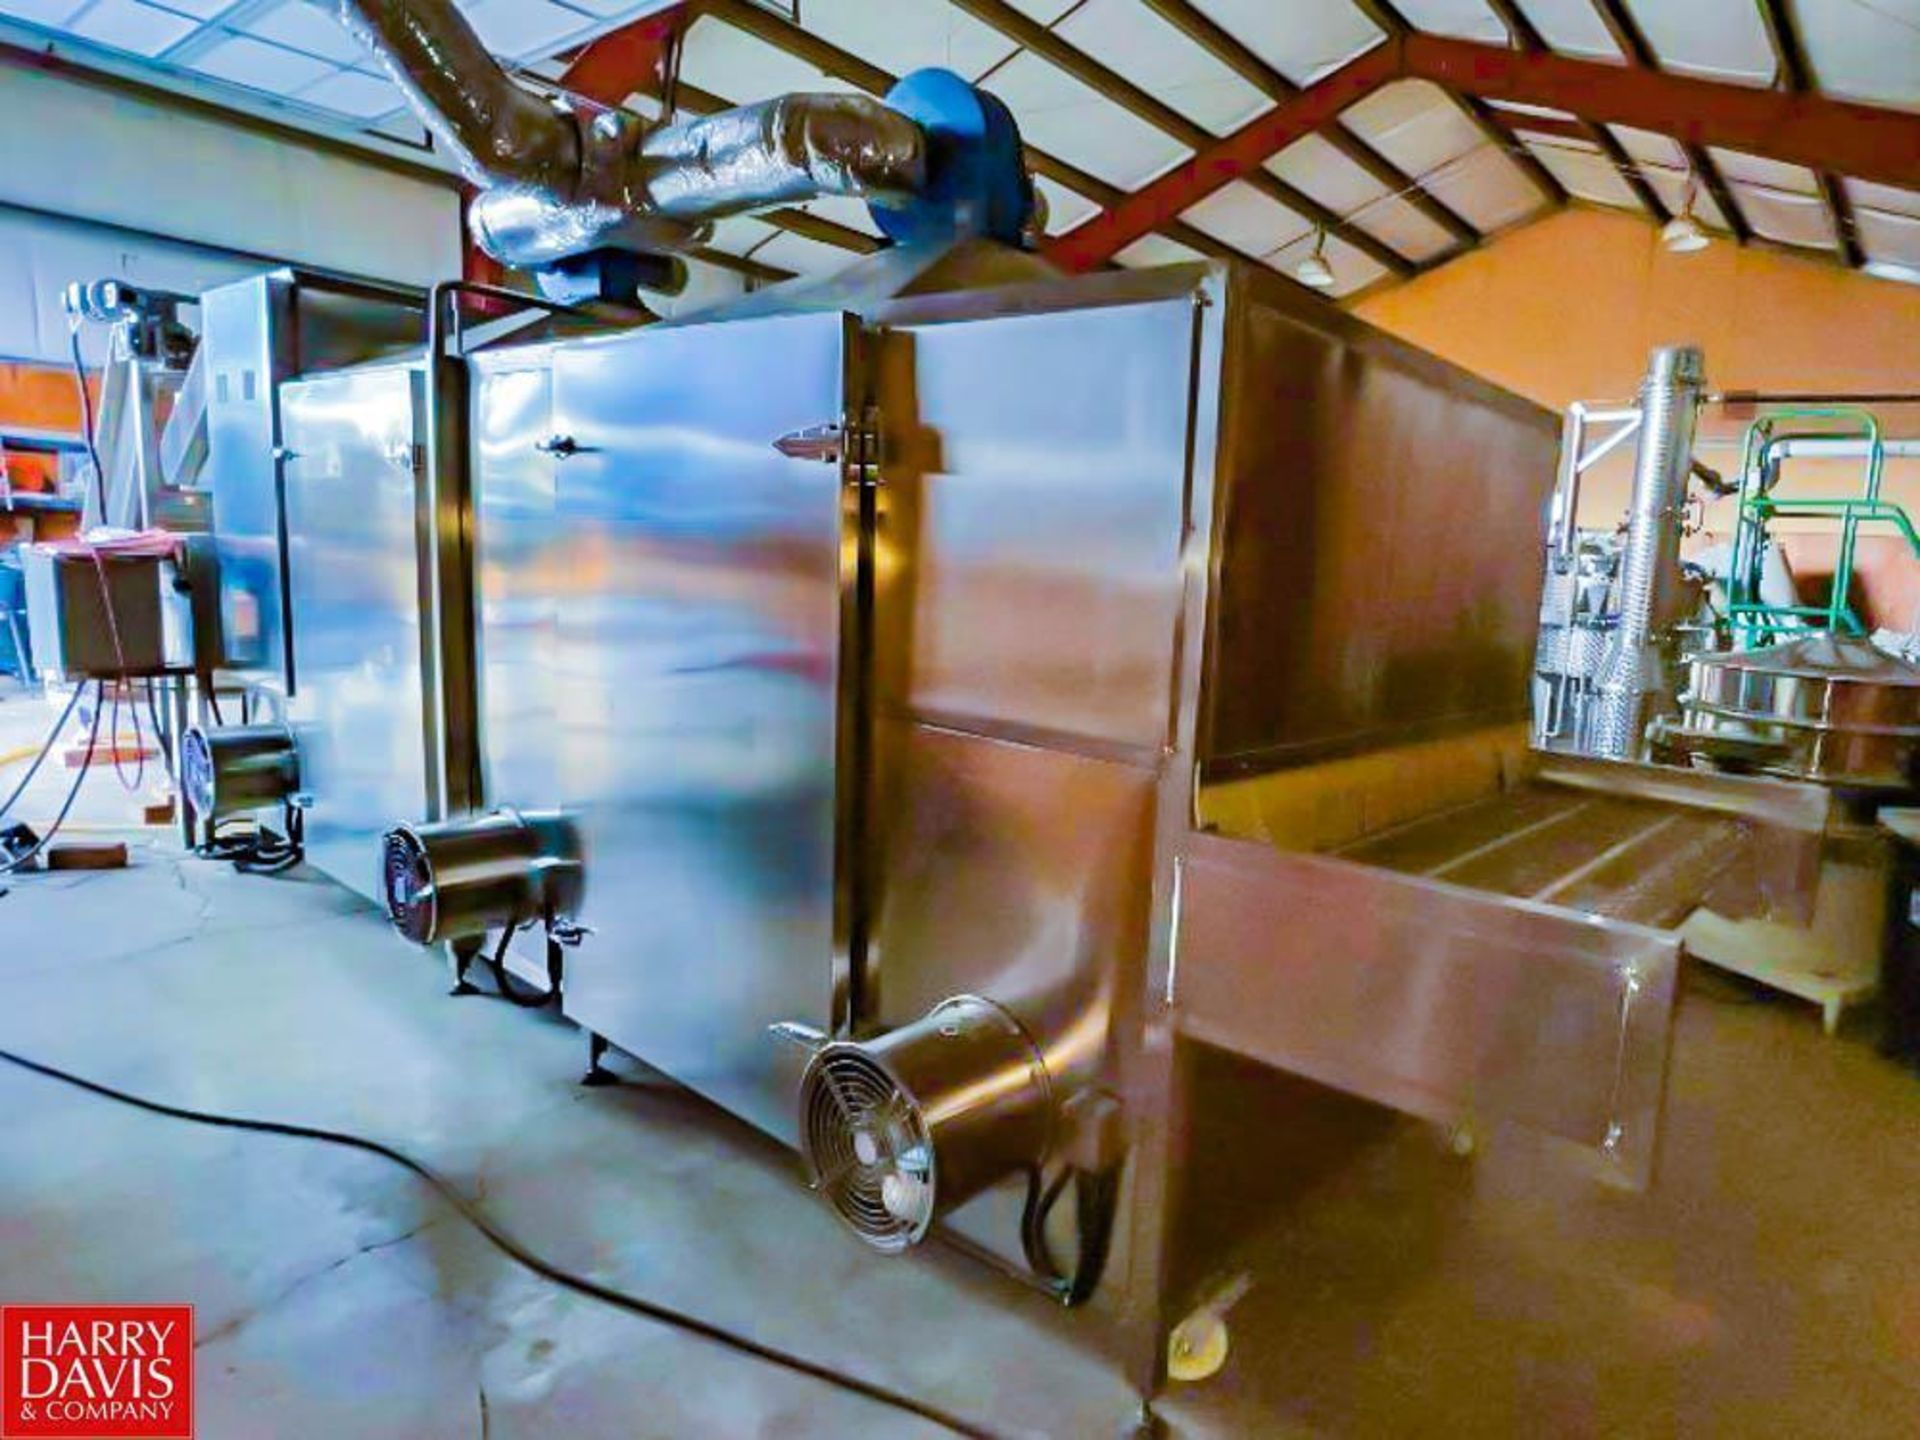 NEW 2019 Hemp Drying Machine Model DF-1: SN 201908001, with Elevator, Dimensions = 20' Length x 5' W